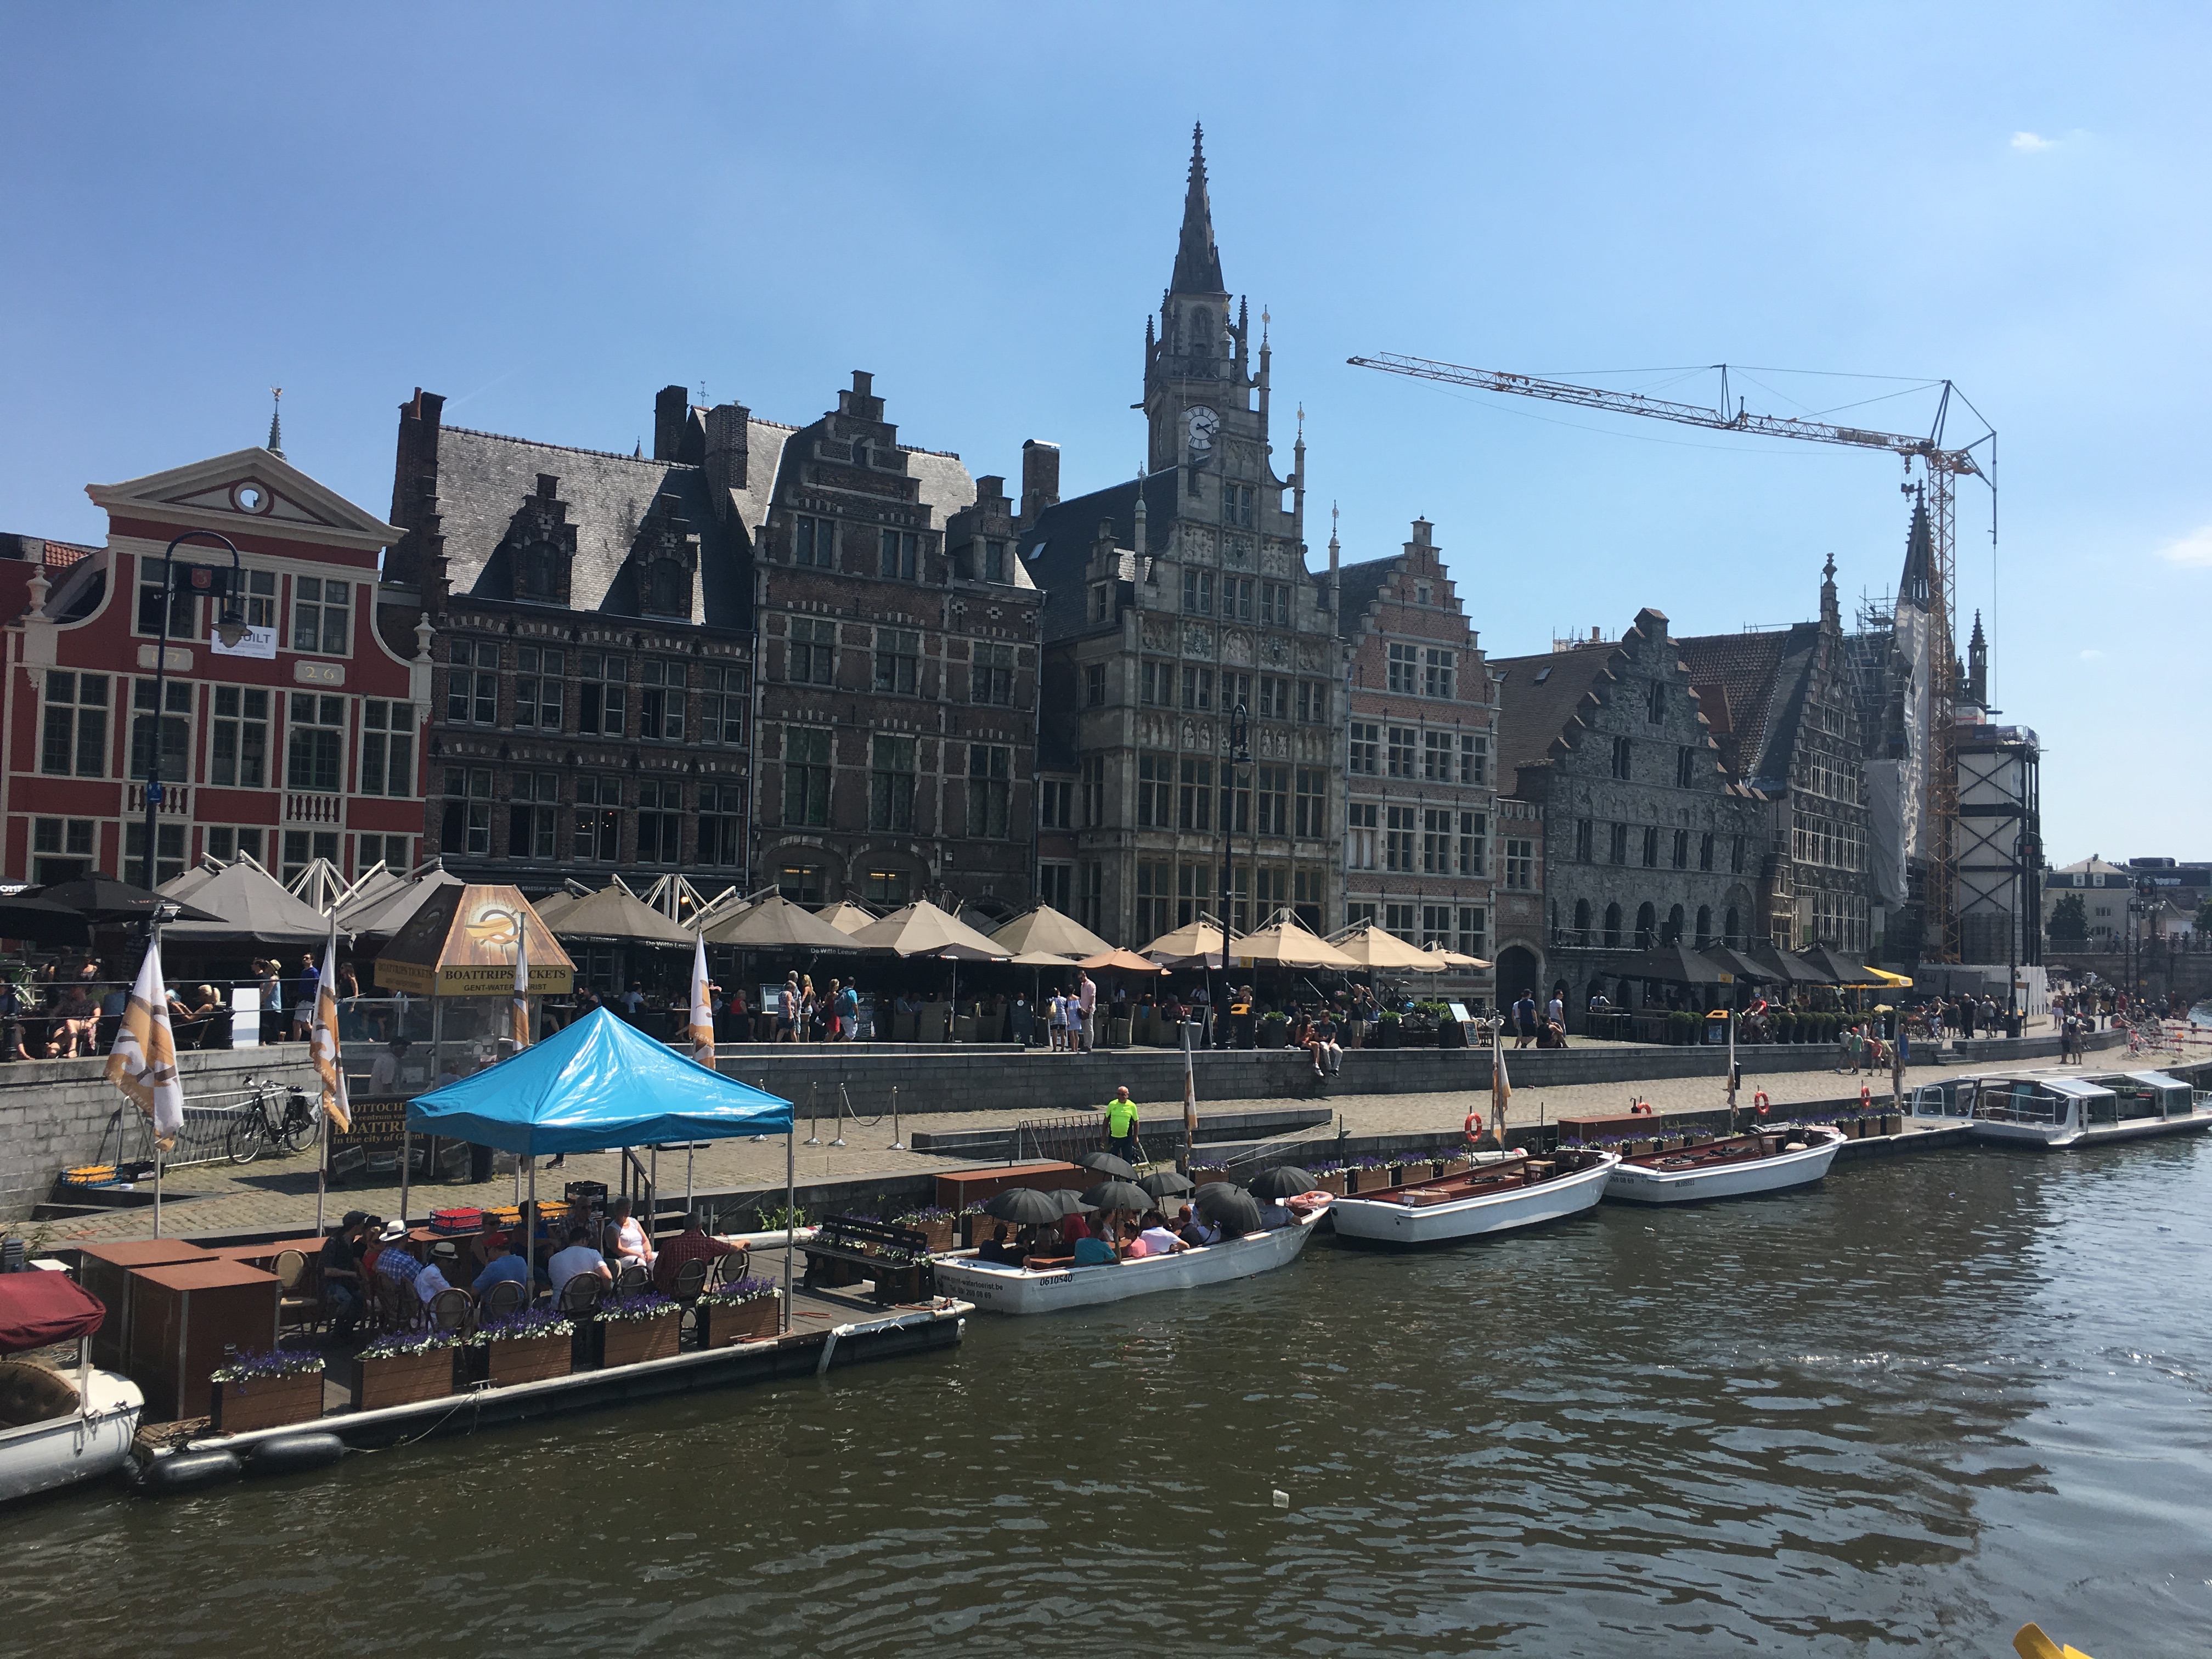 Buildings along the water in Ghent, Belgium.